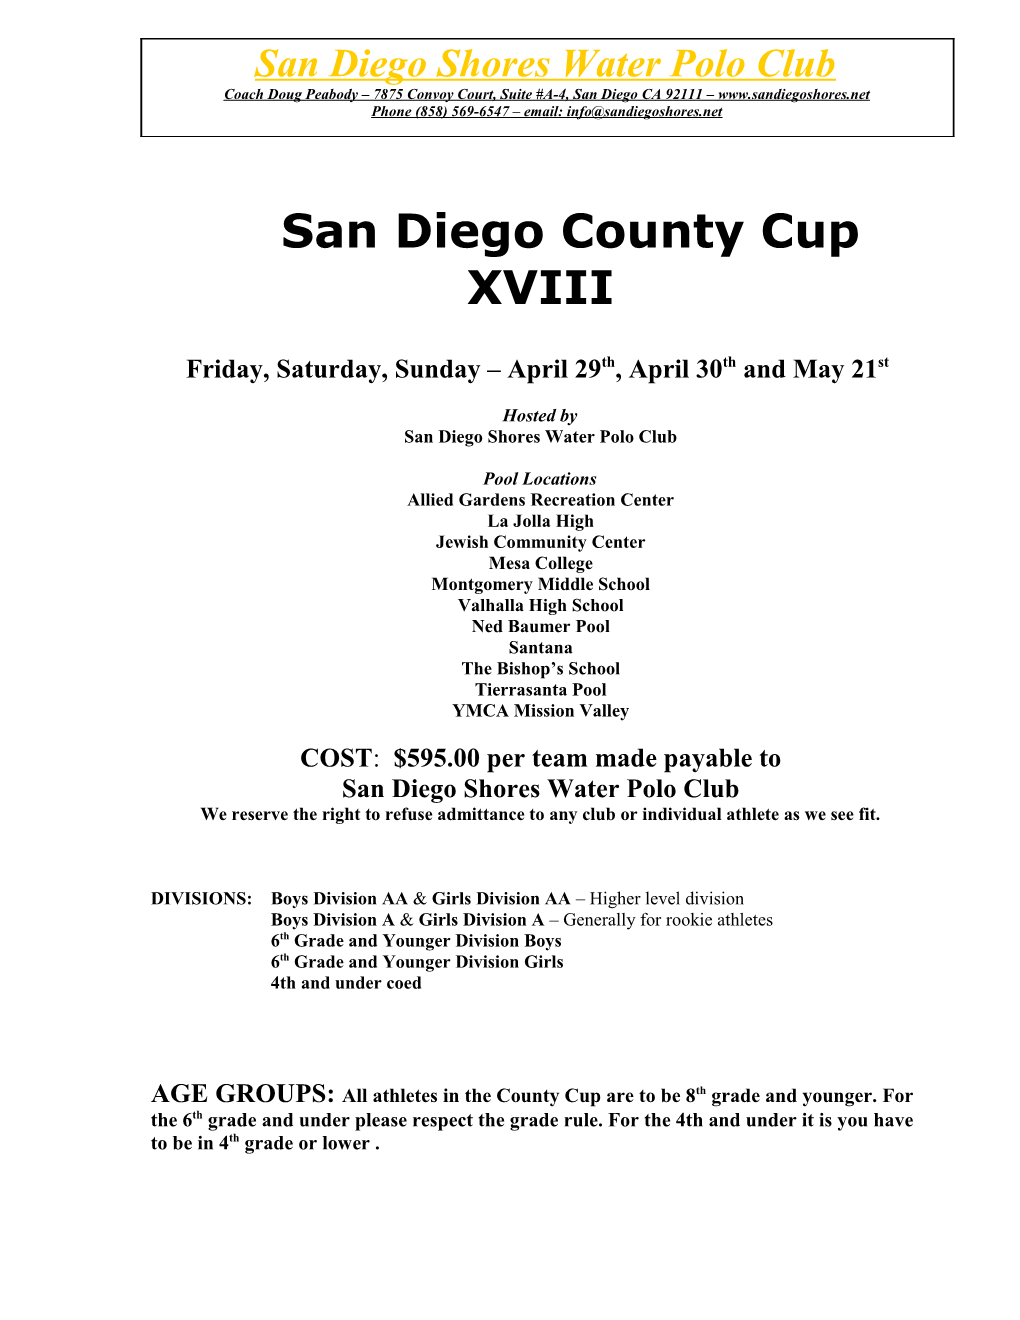 San Diego County Cup XVIII